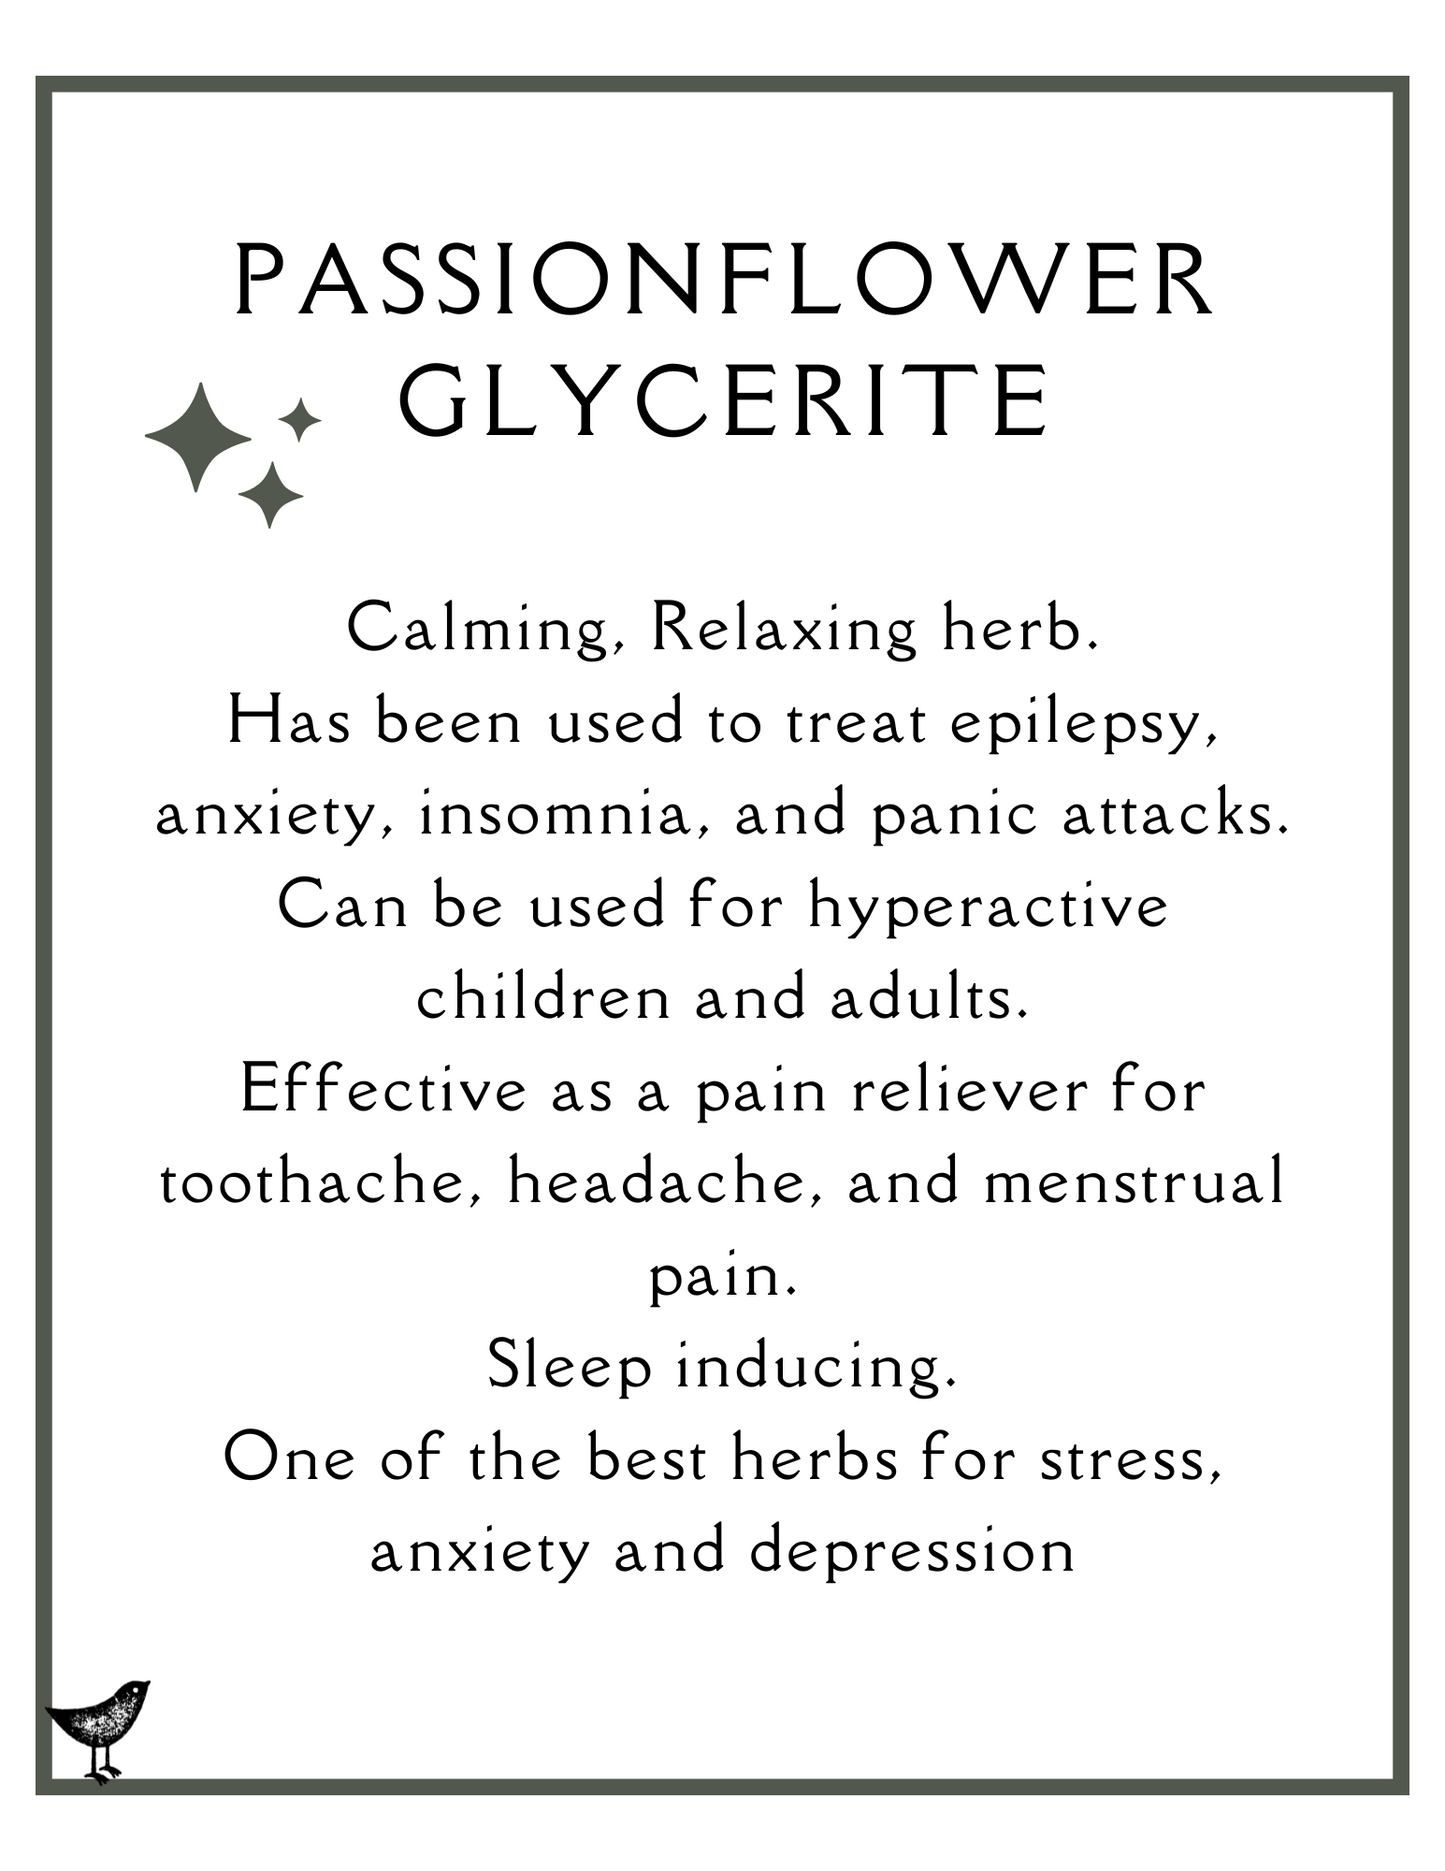 Passionflower Glycerite